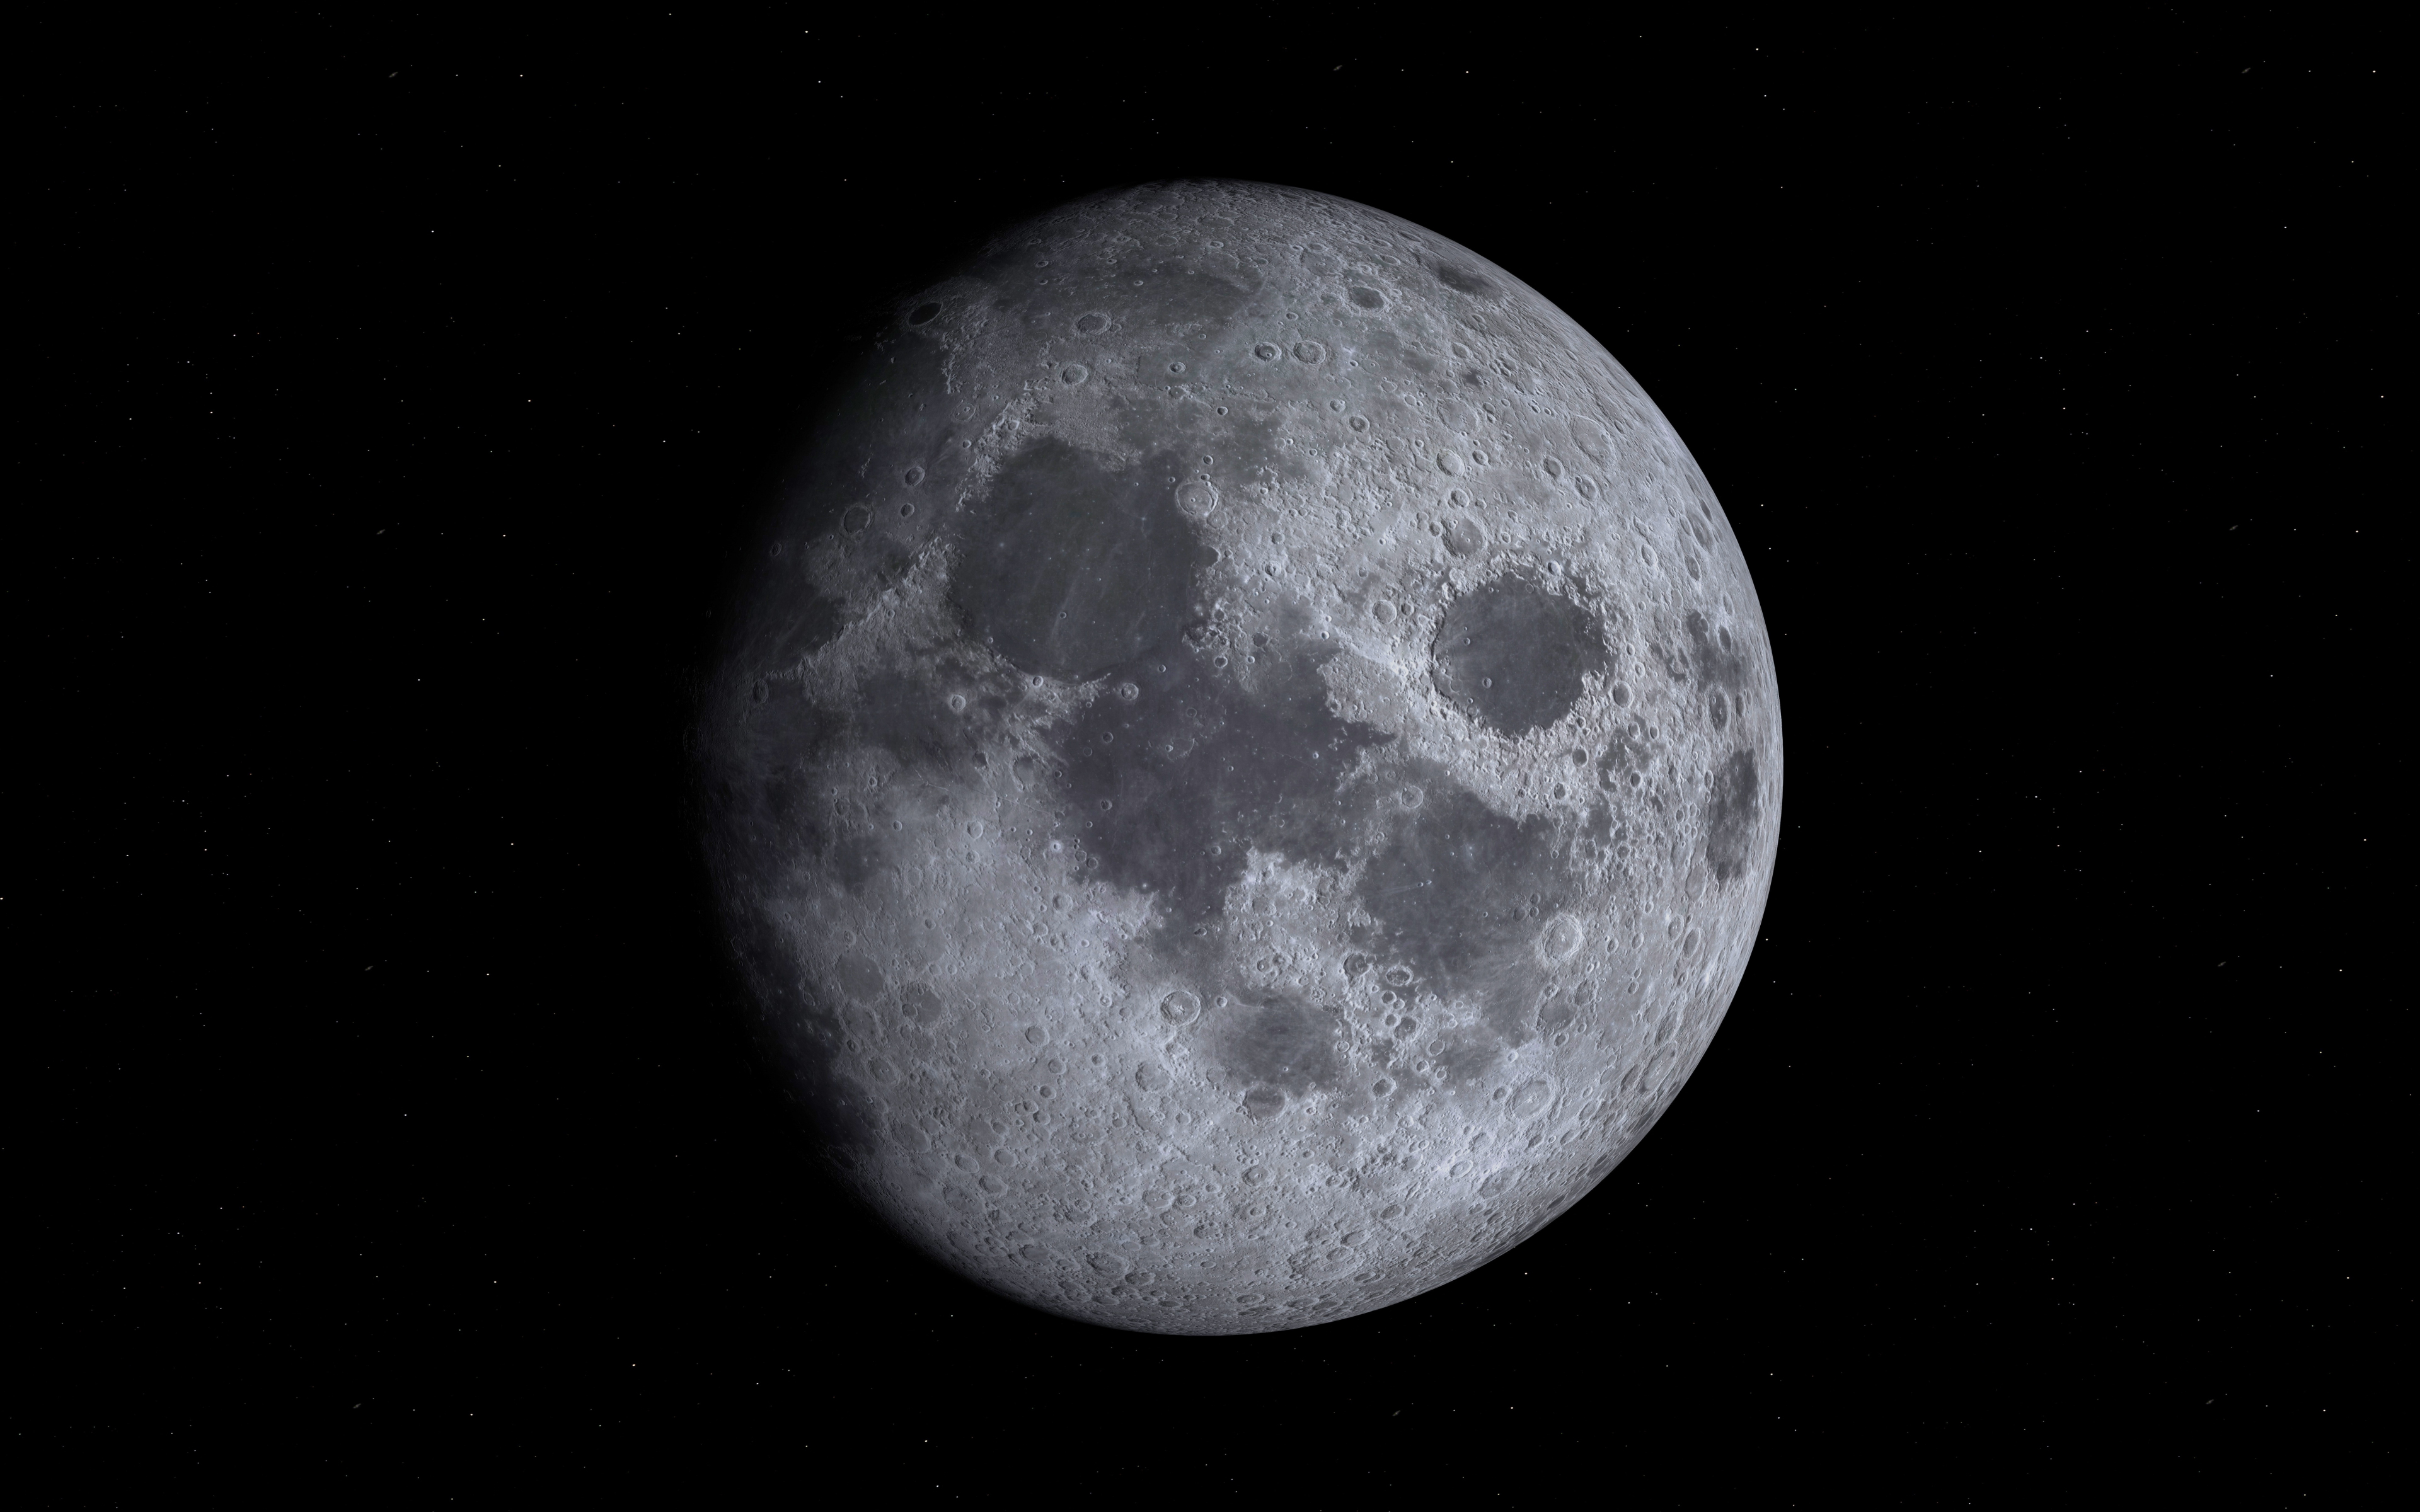 Download wallpaper 3840x2400 full moon, monochrome, space, dark 4k